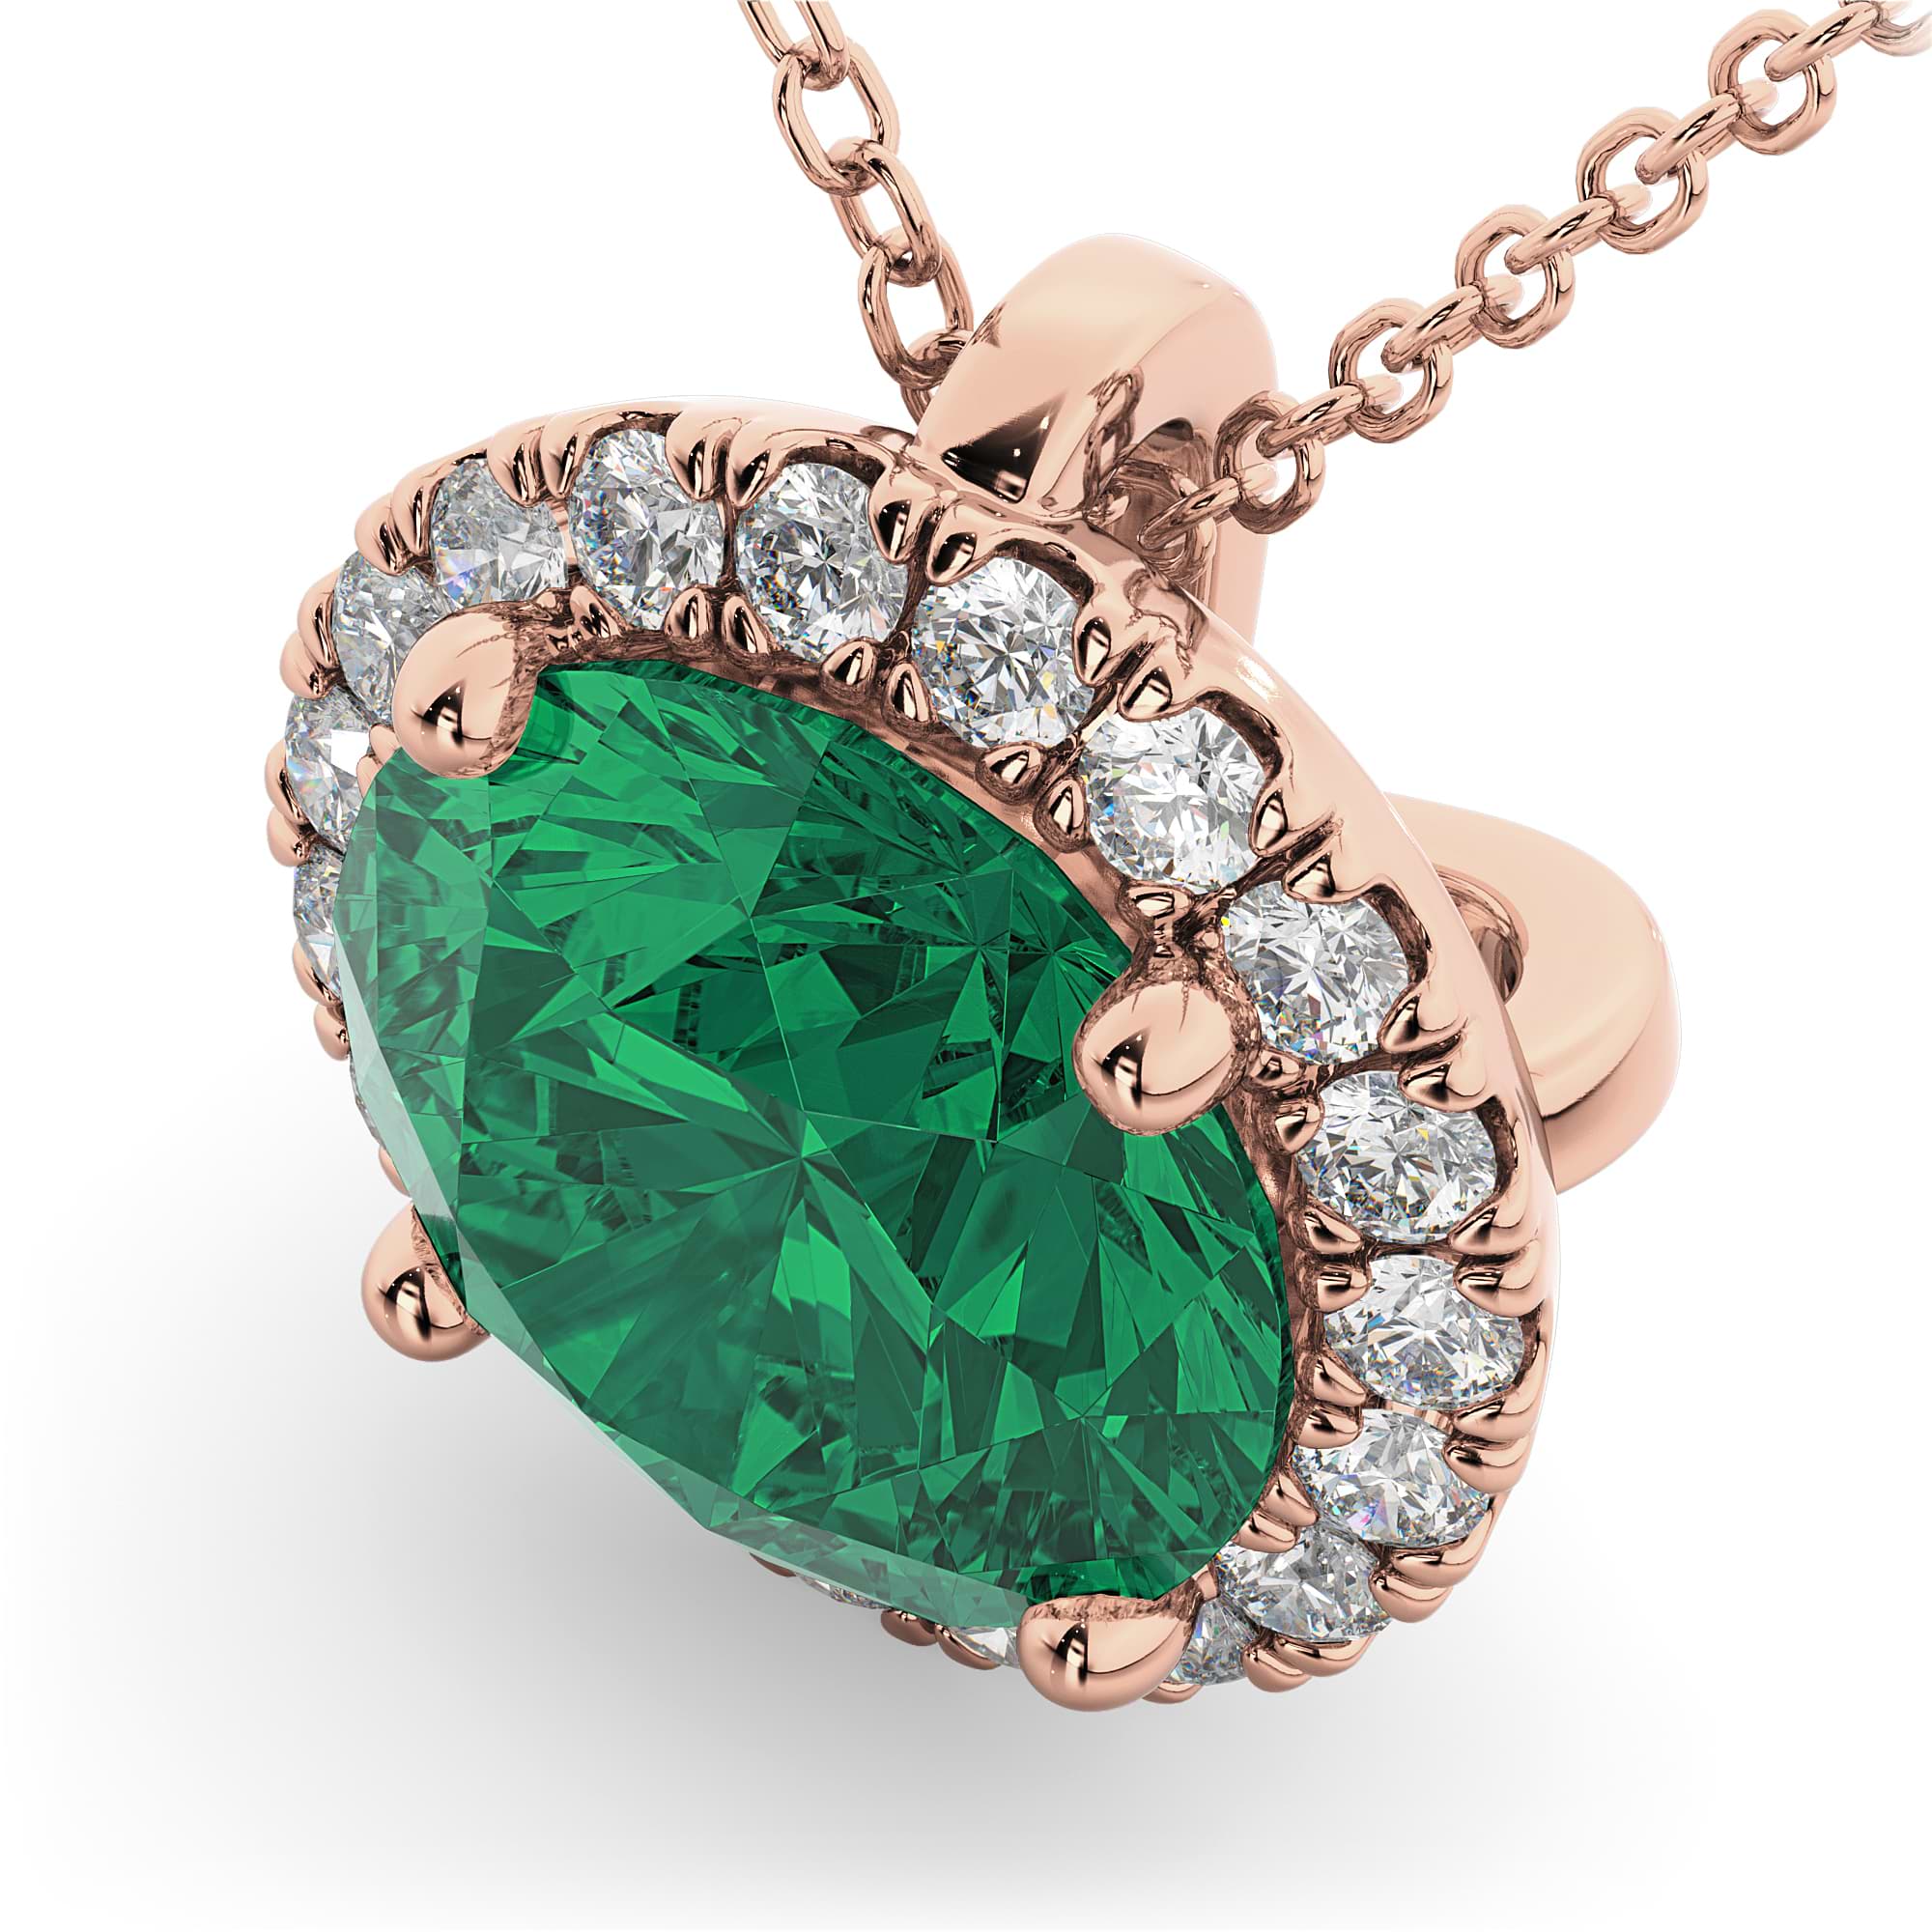 Halo Round Emerald & Diamond Pendant Necklace 14k Rose Gold (2.79ct)